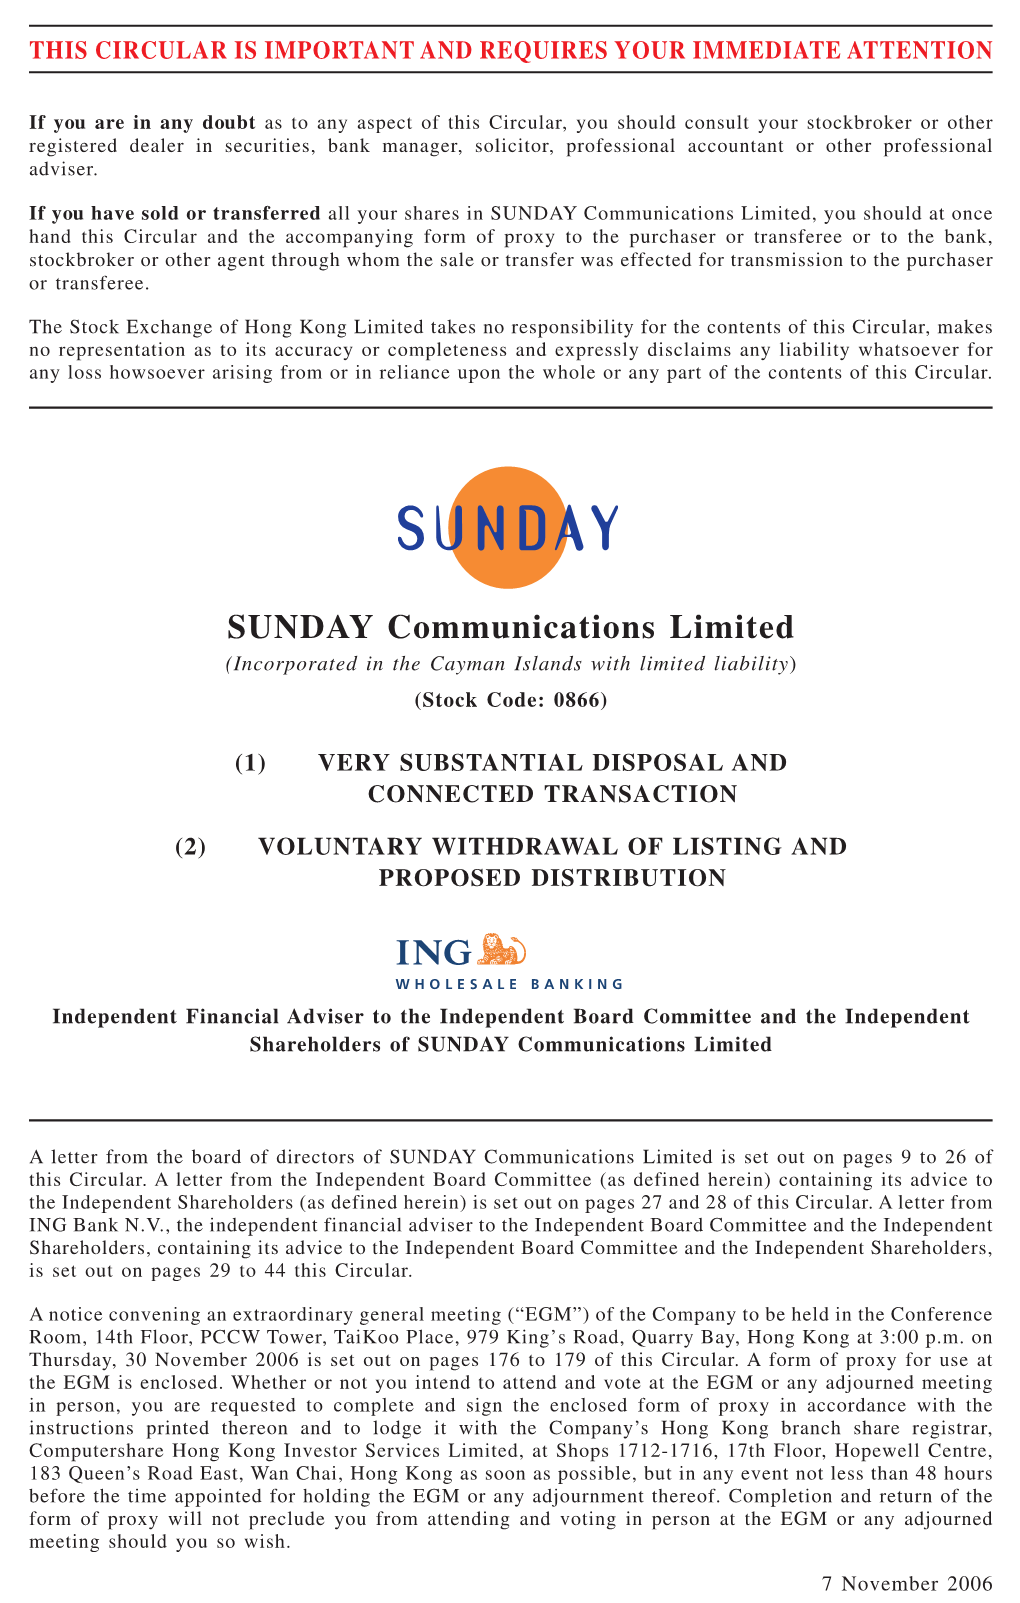 SUNDAY Communications Limited